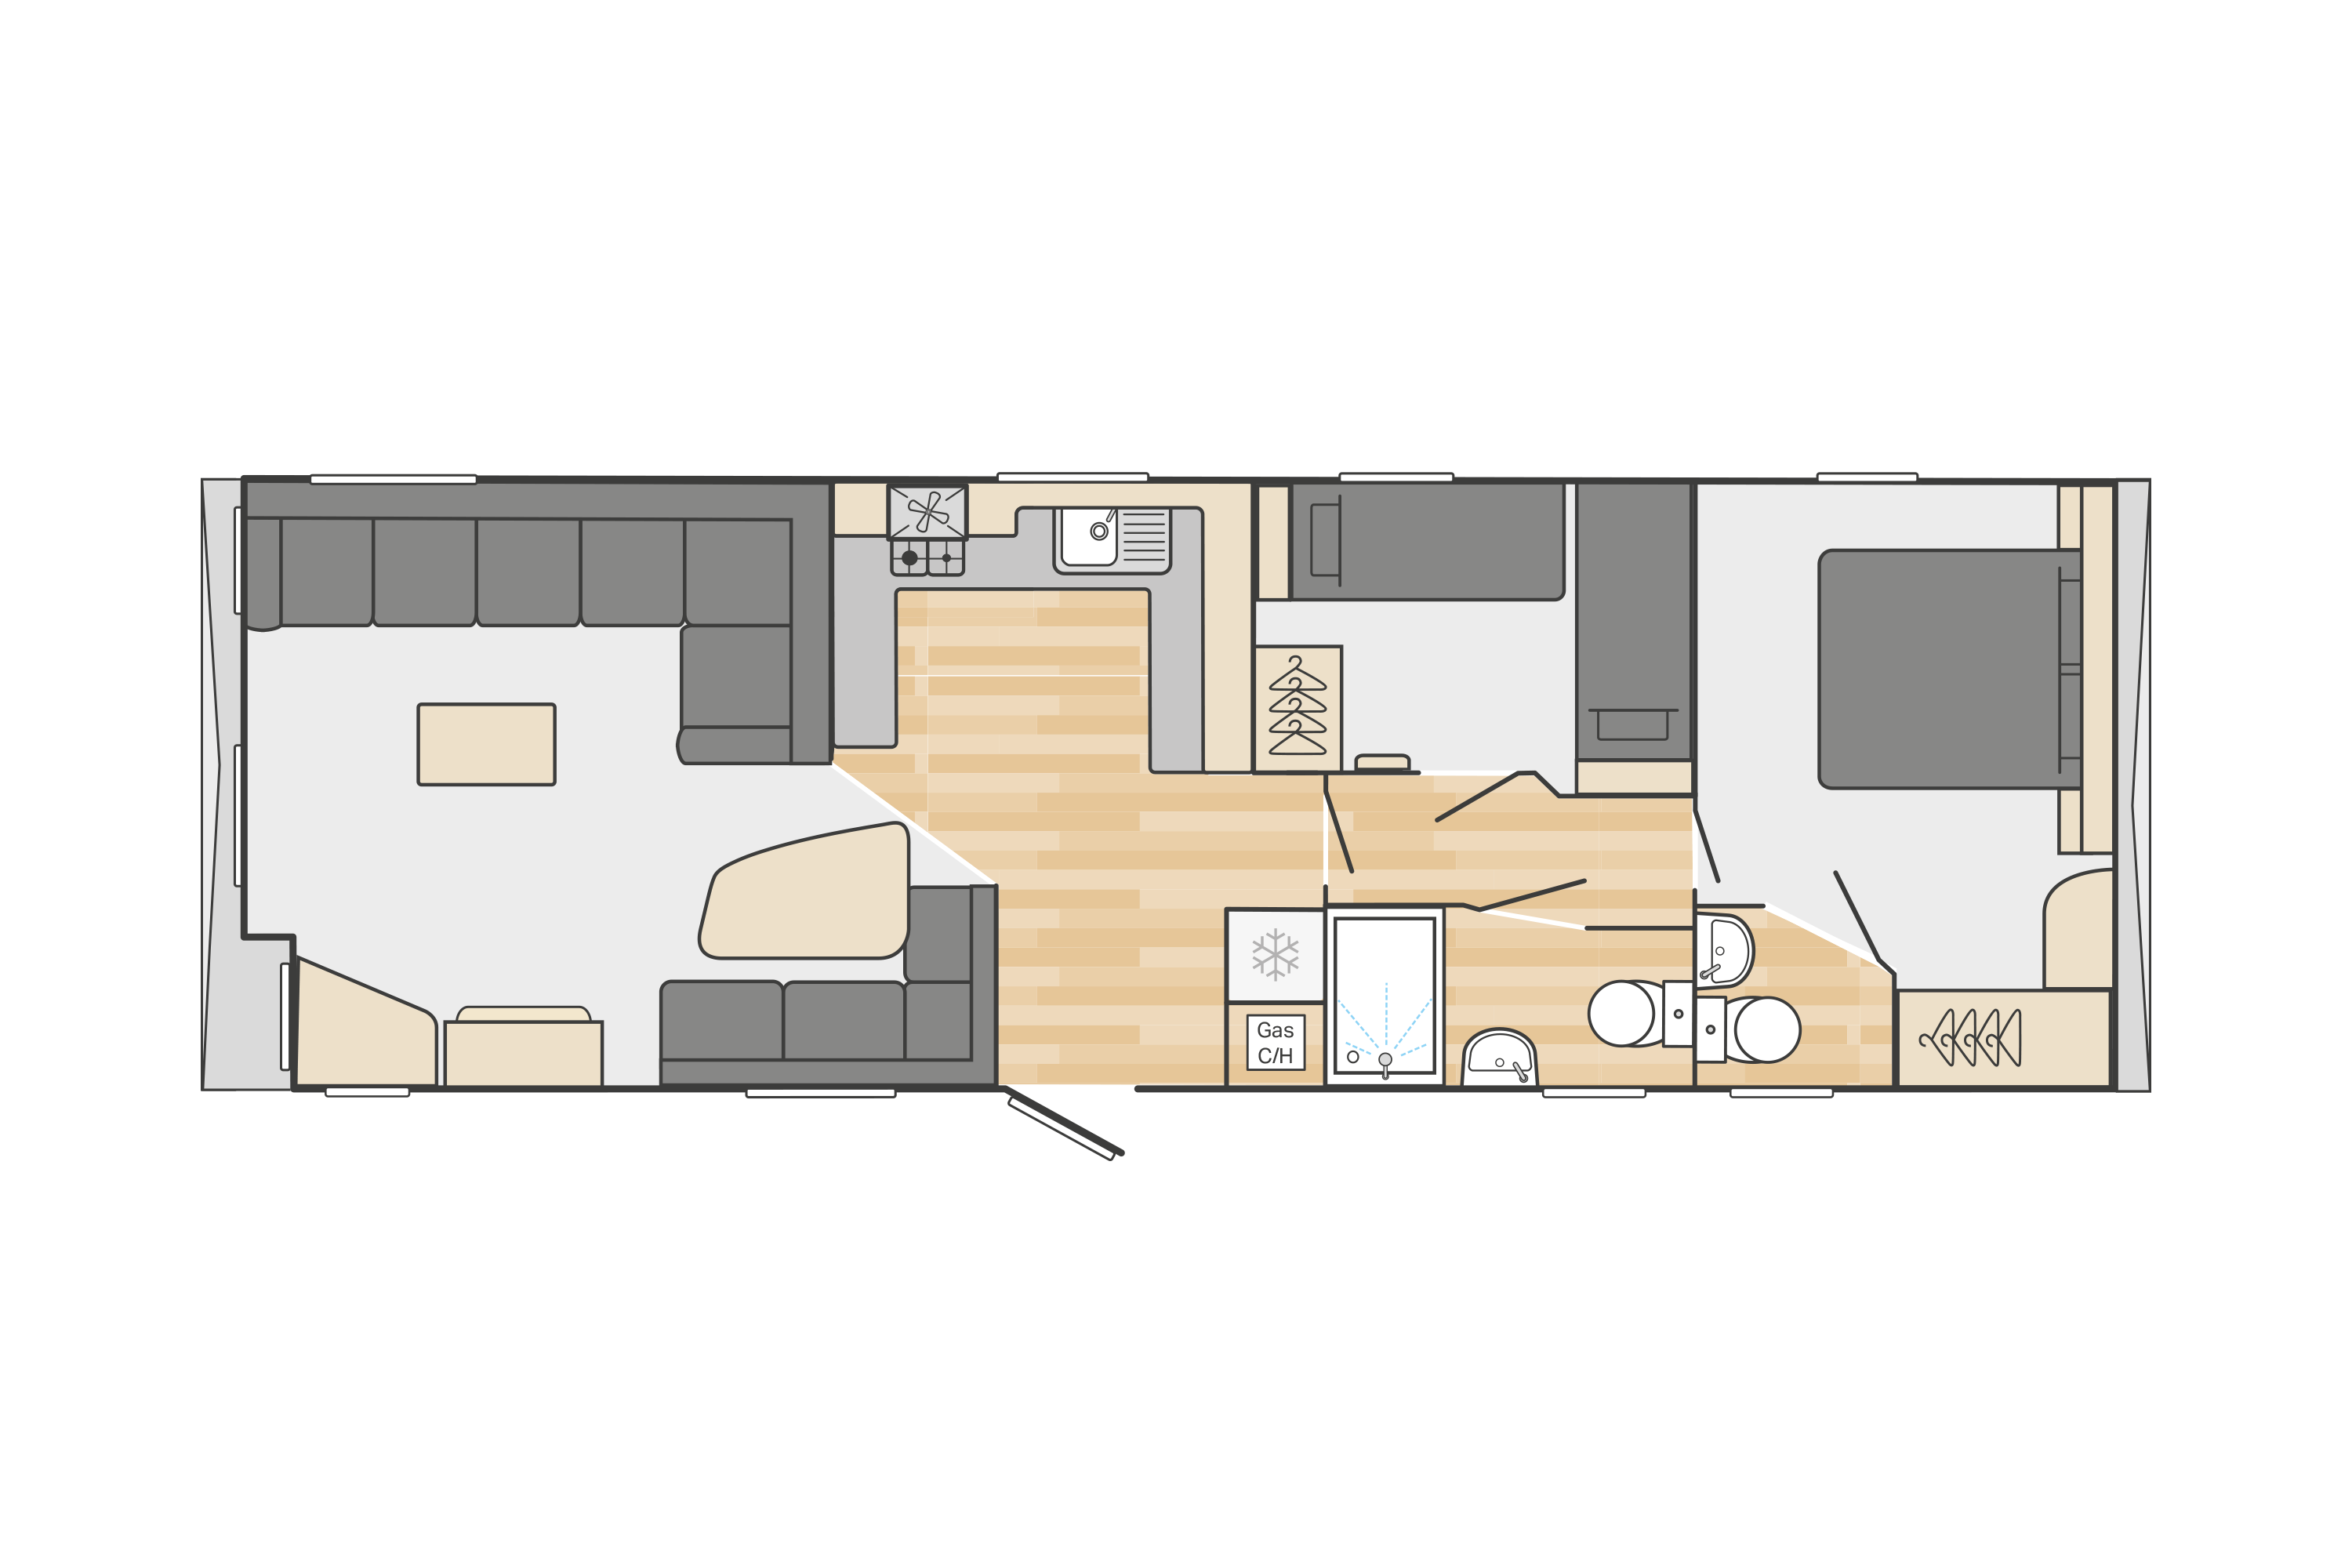 Burgundy 36' x 12' 2 Bedroom floorplan